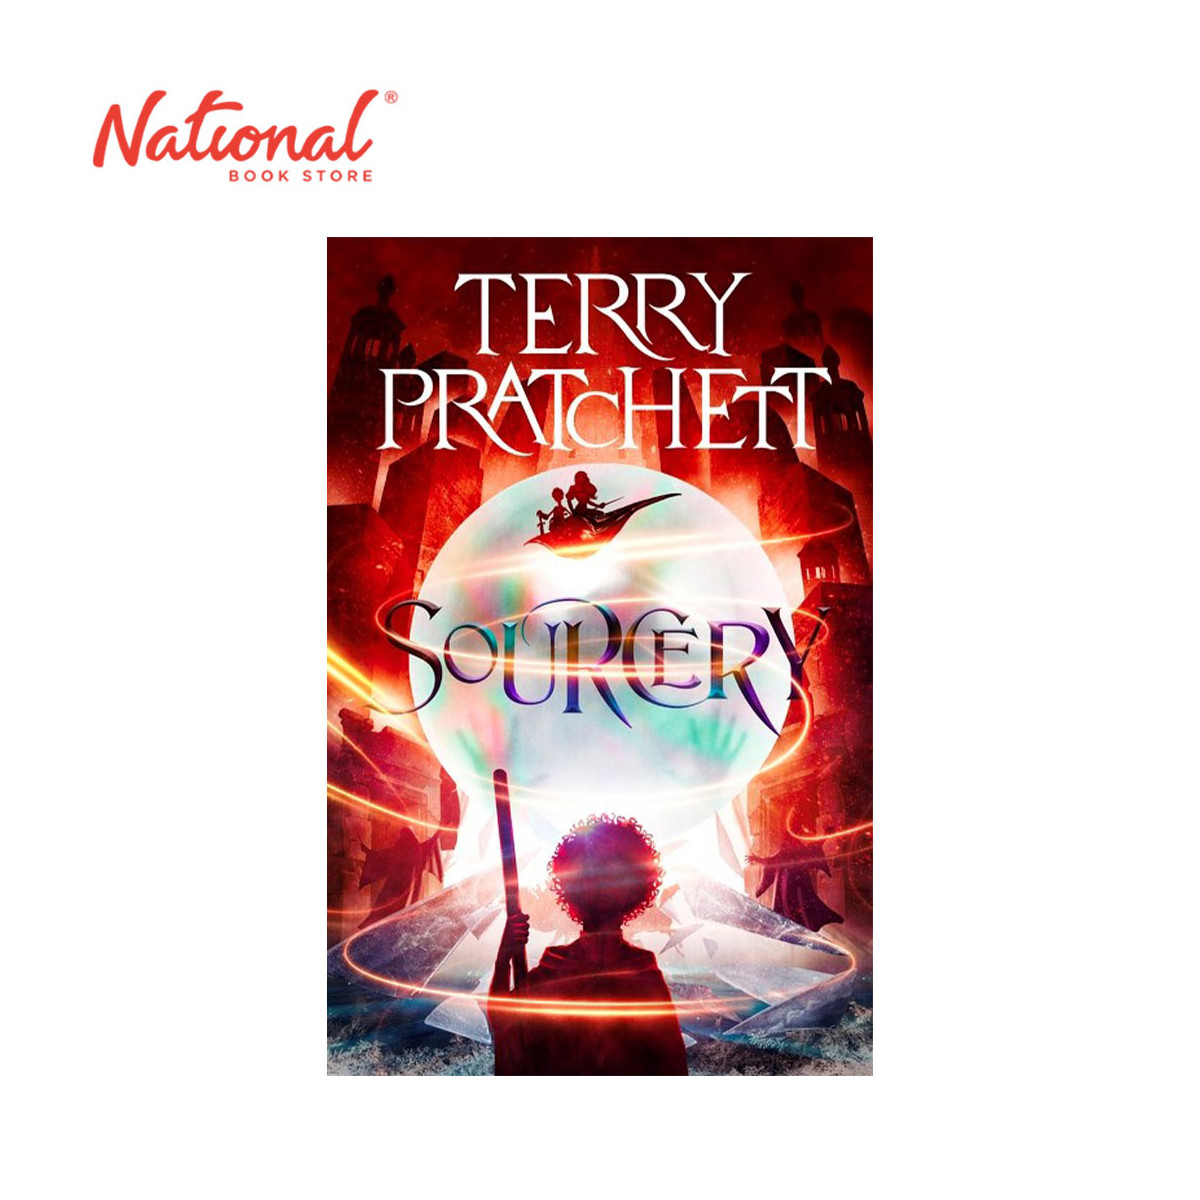 *PRE-ORDER* Sourcery by Terry Pratchett - Trade Paperback - Sci-Fi, Fantasy & Horror